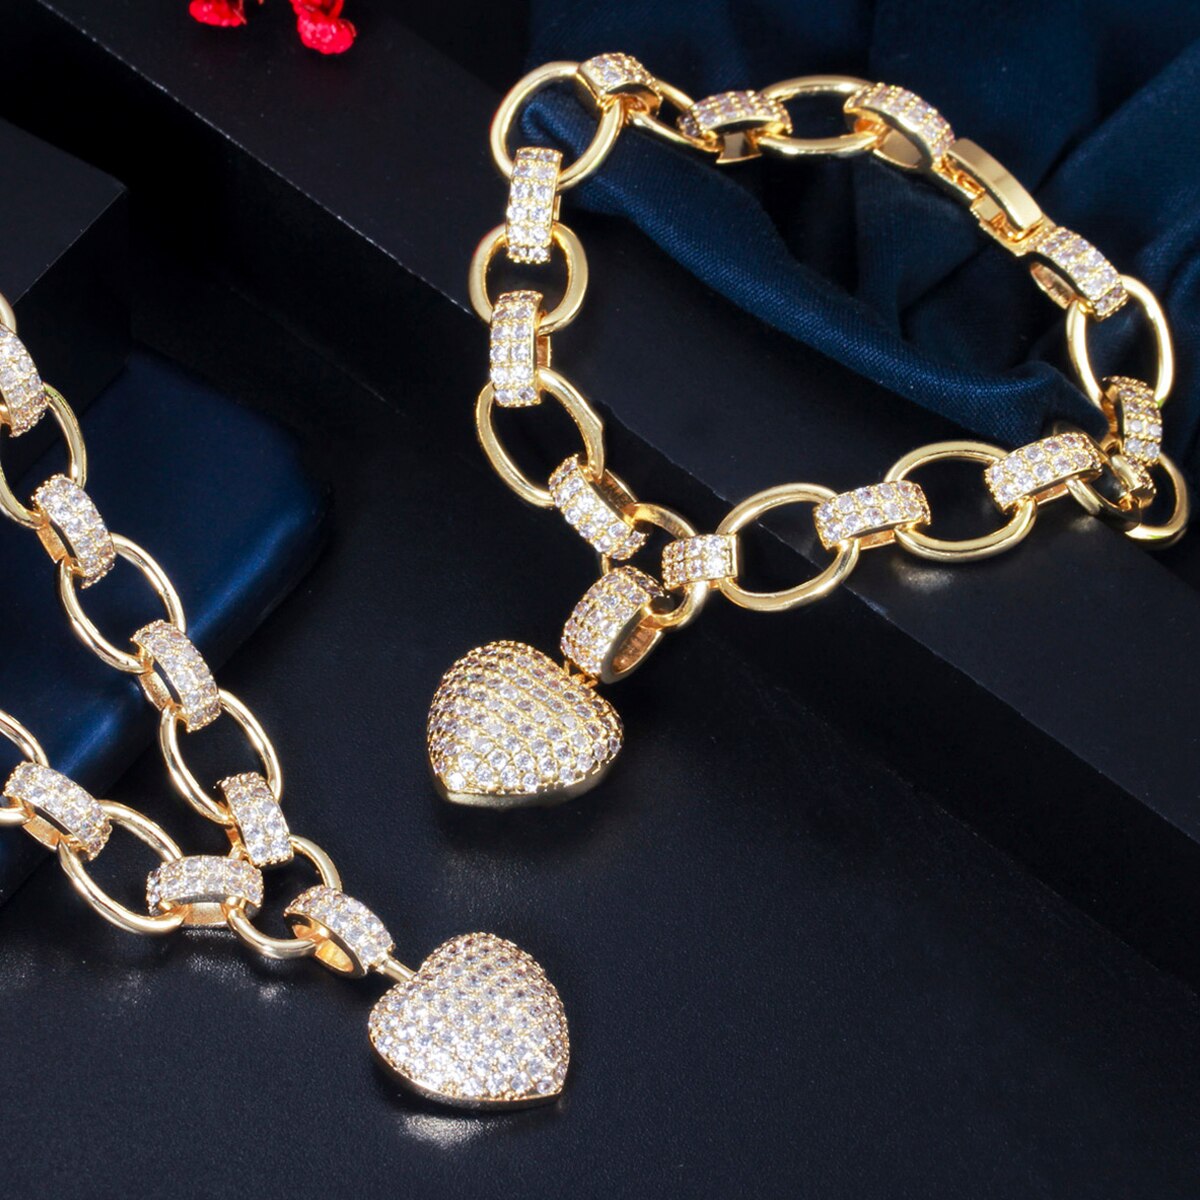 ThreeGraces-Luxury-Cubic-Zirconia-Stone-Yellow-Gold-Color-Love-Heart-Pendant-Necklace-Bracelet-Set-f-1005003297996366-10